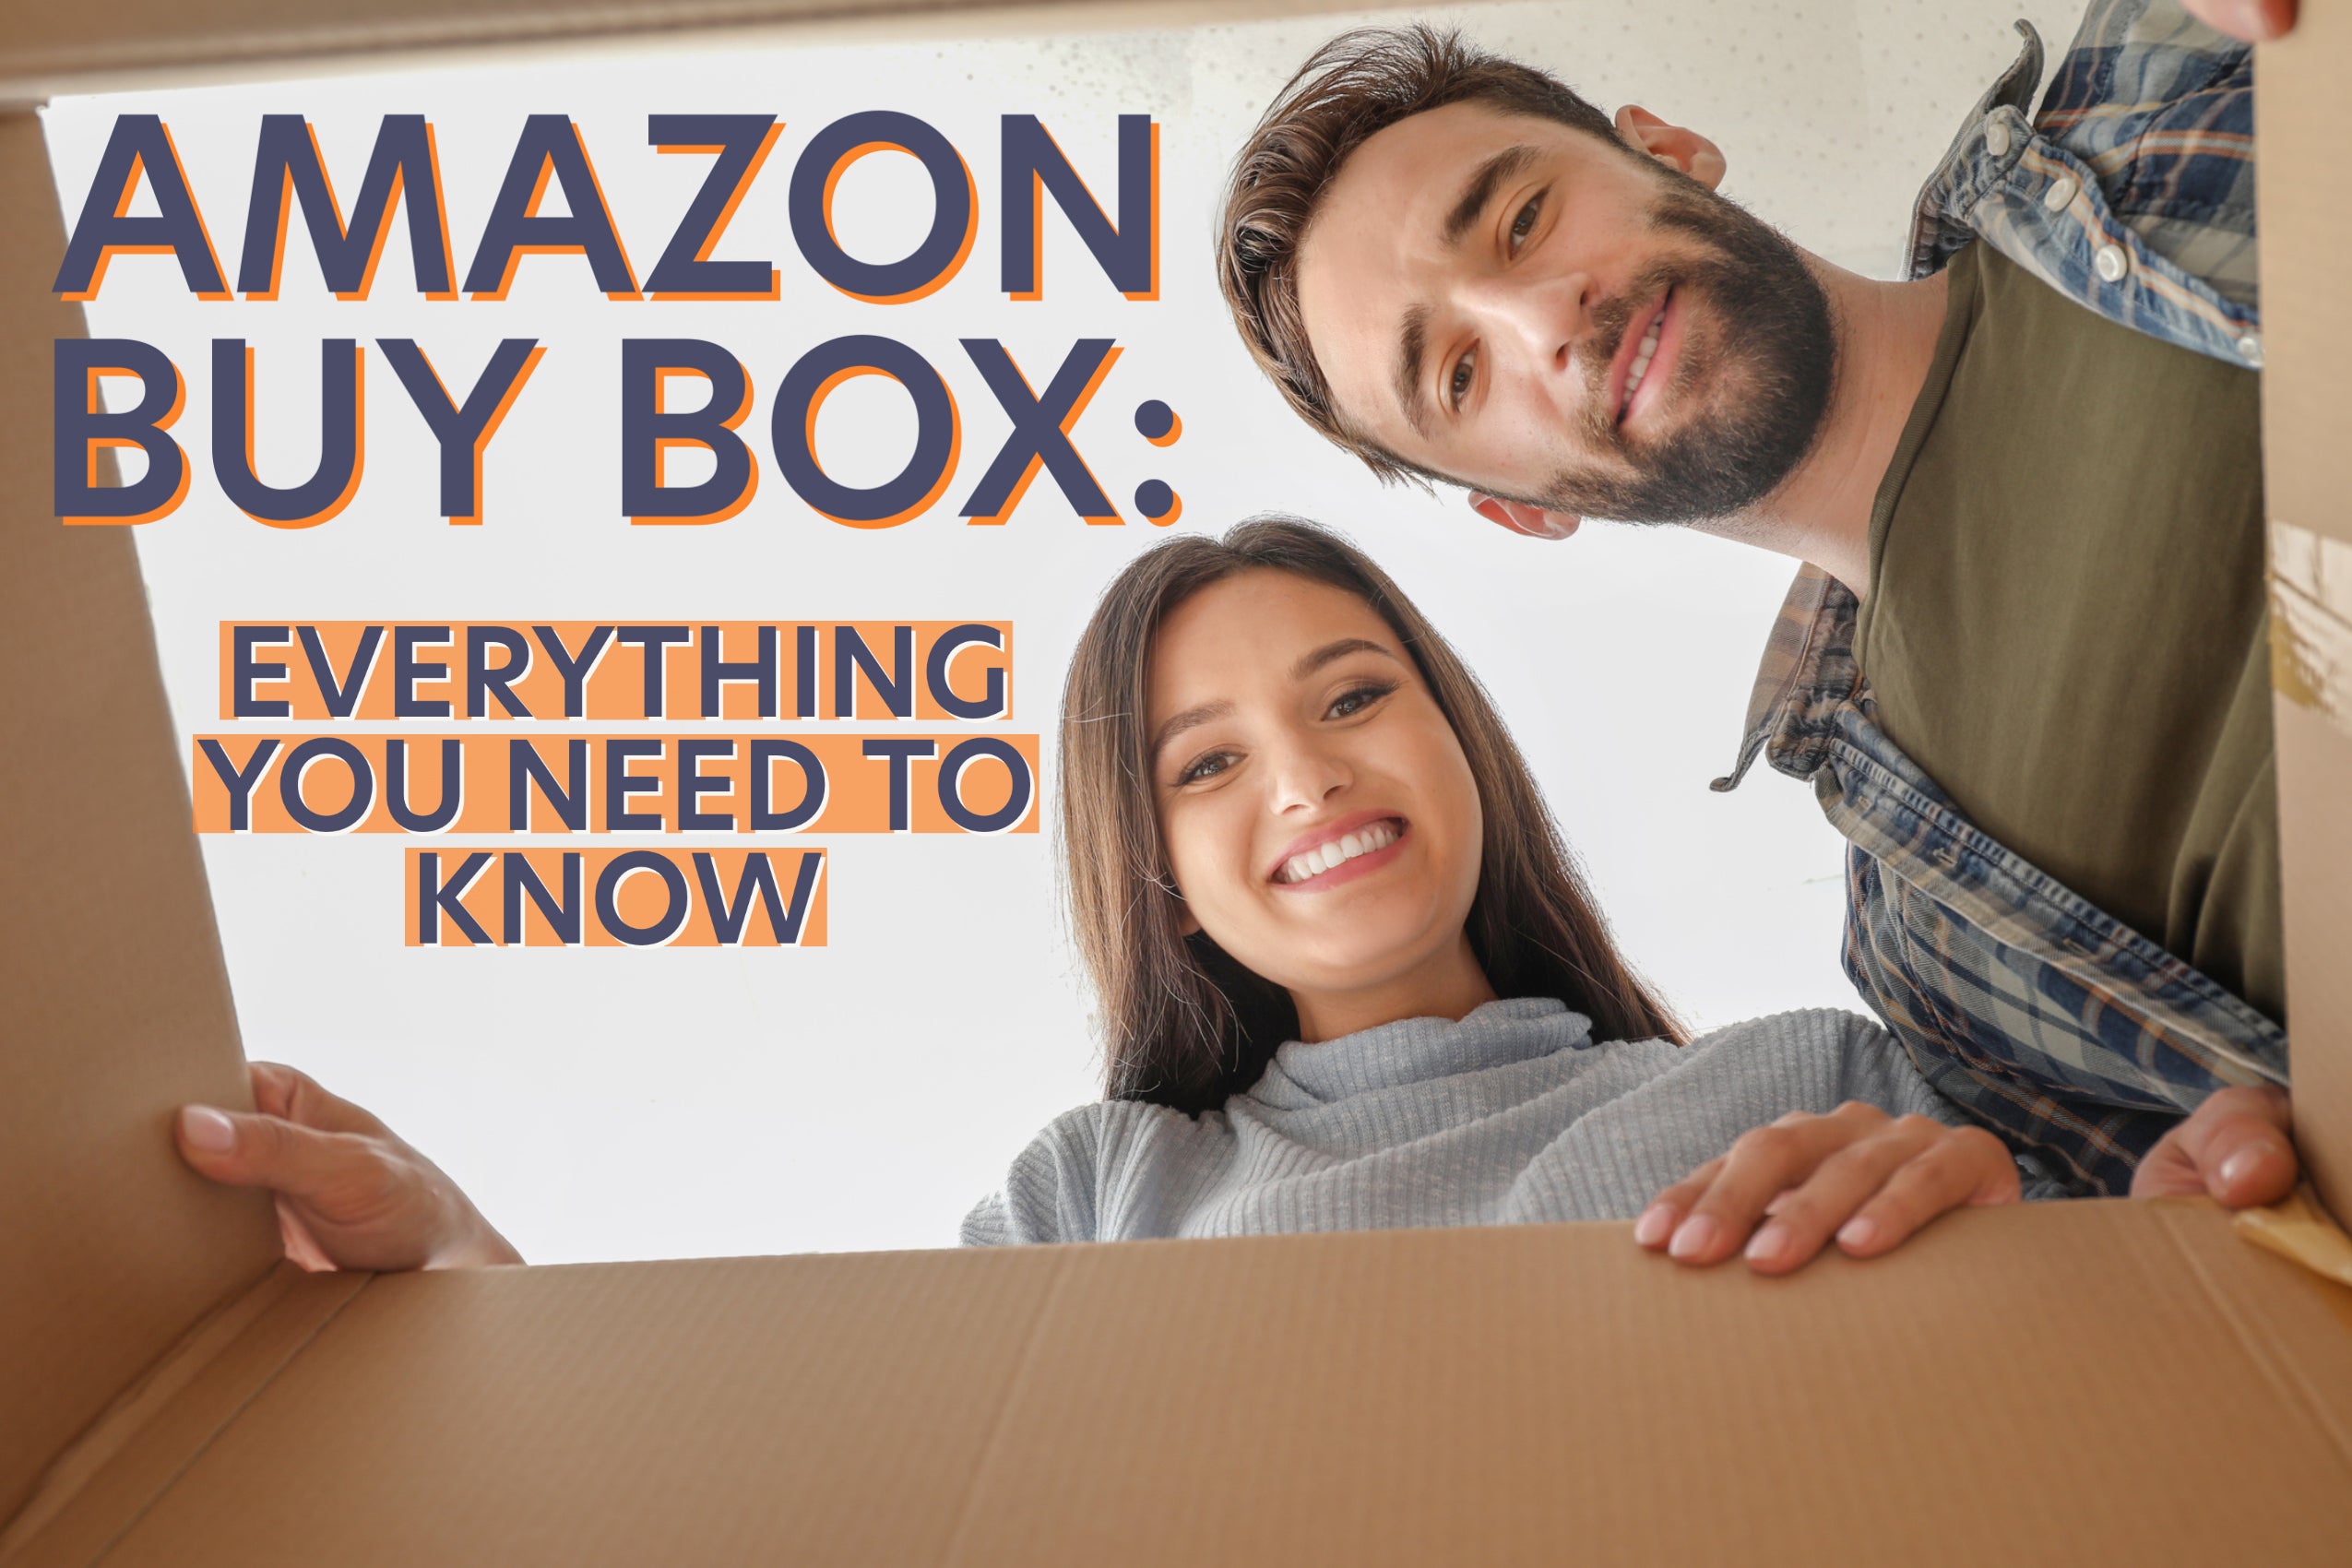 What Is The Amazon Buy Box?